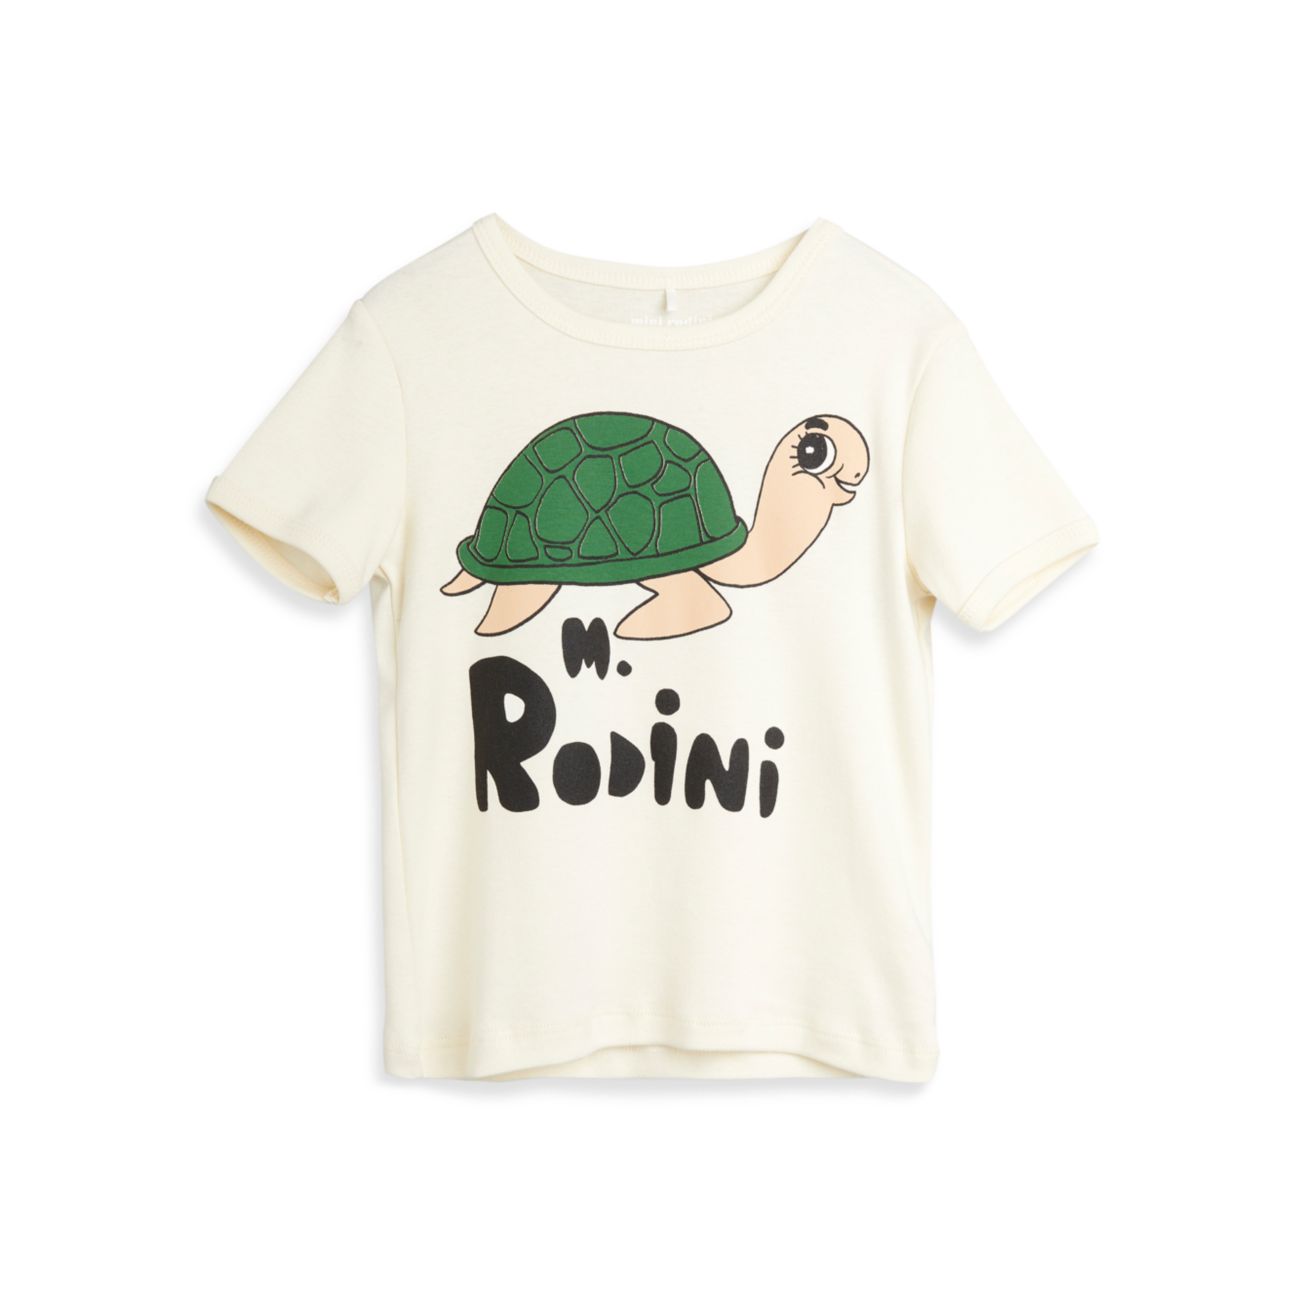 Little Kid's & amp; Детская футболка из органического хлопка с черепахой Mini rodini